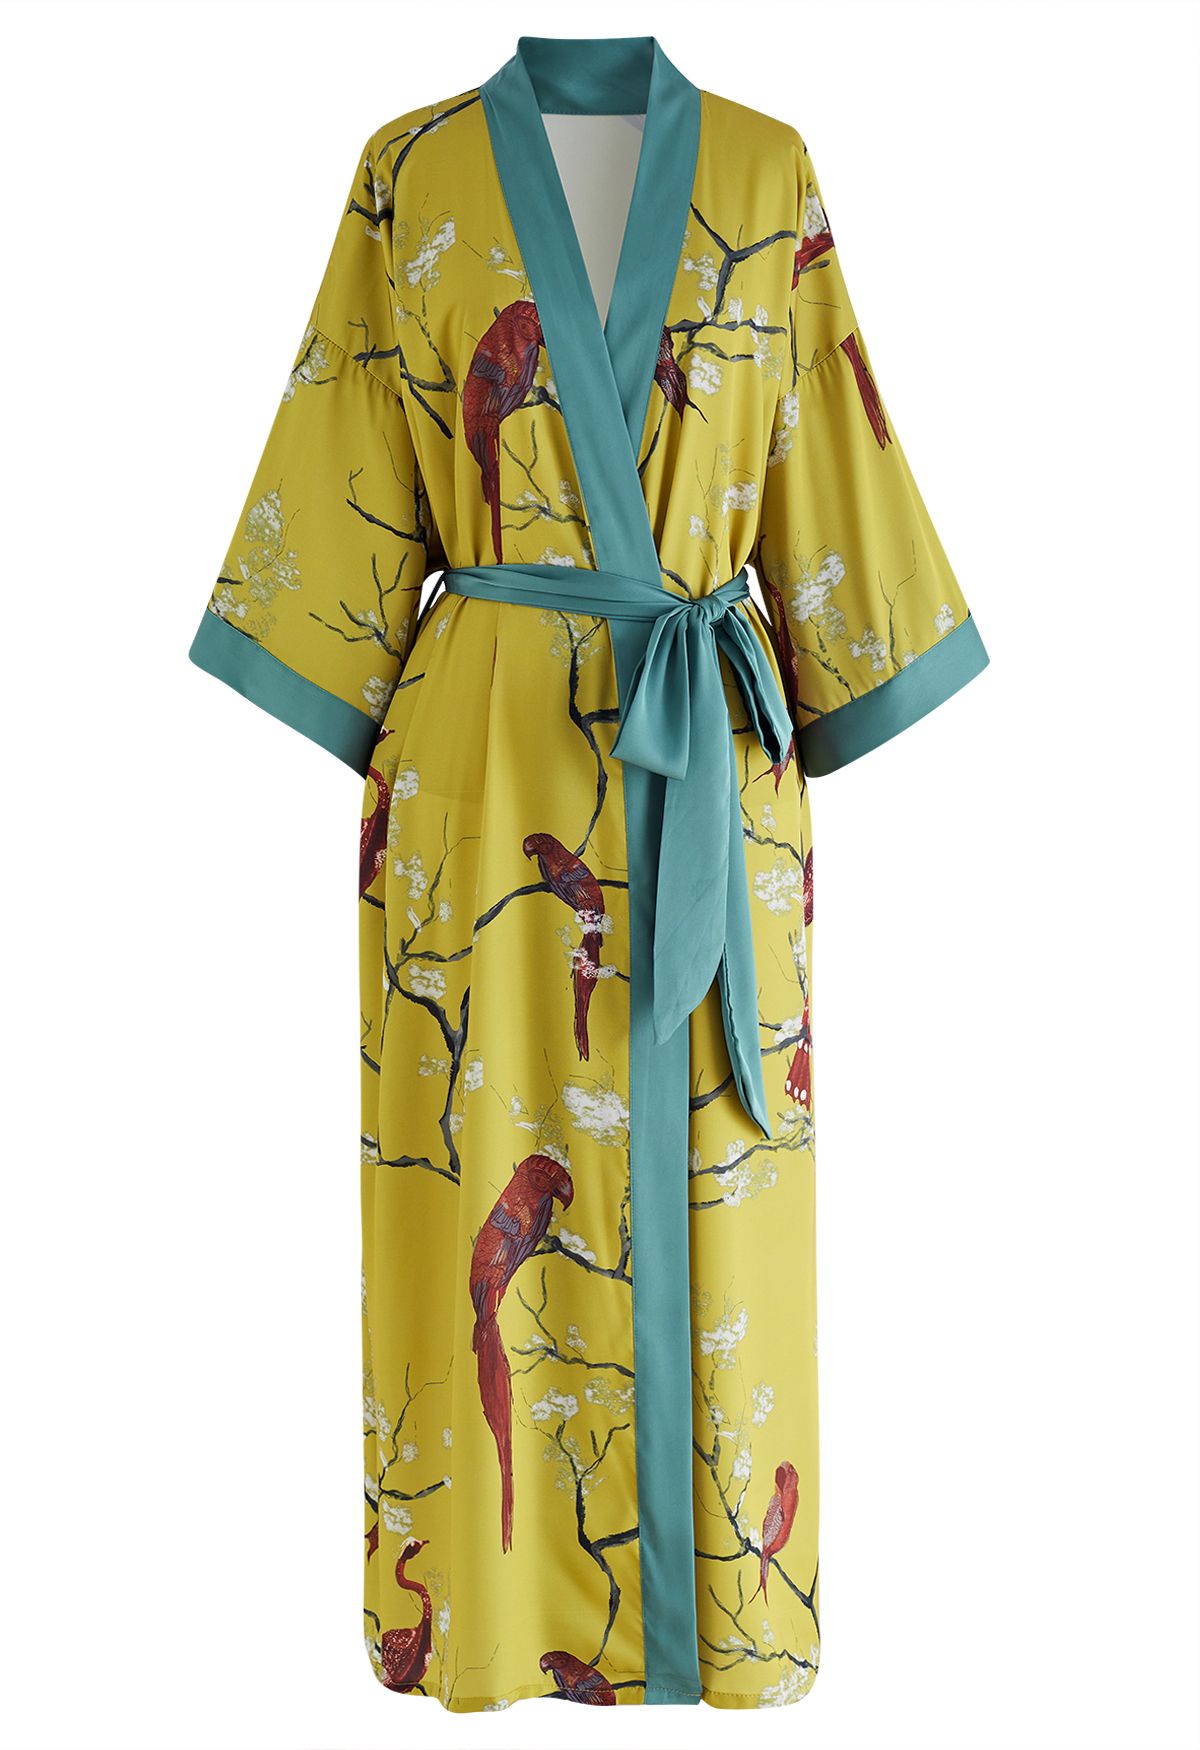 Parrot Print Satin Robe in Yellow